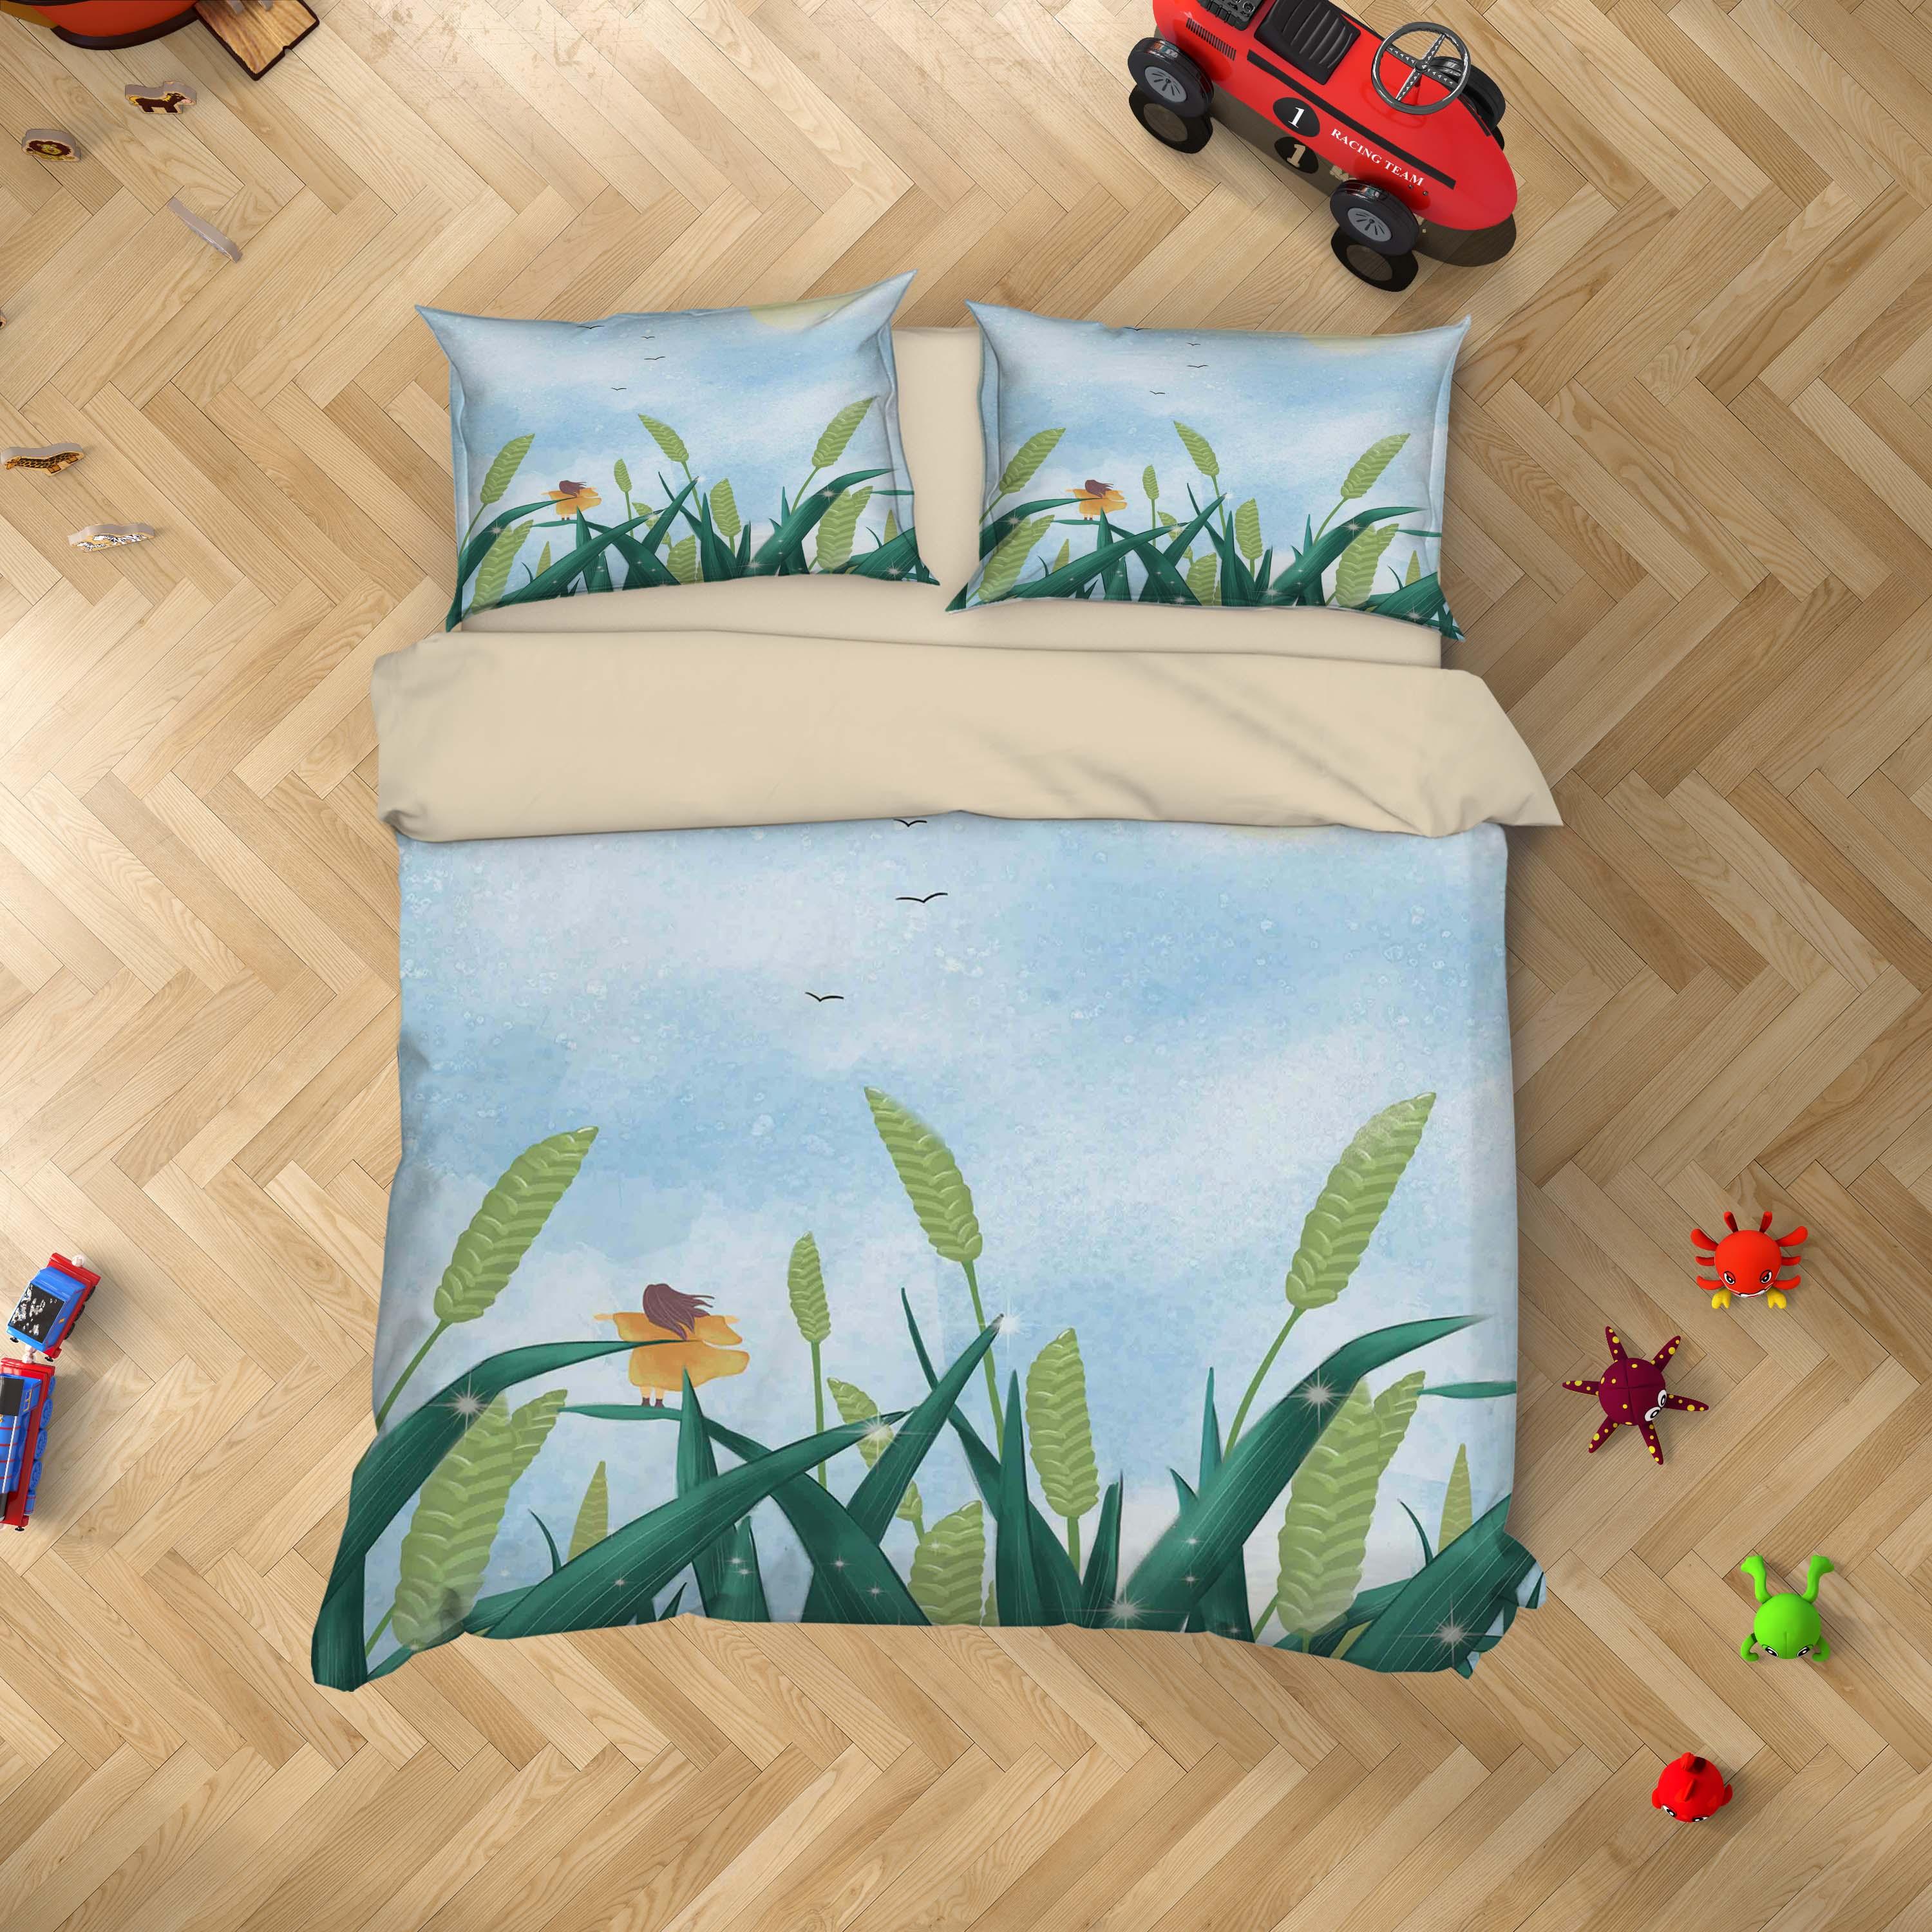 3D Wheat Sky Painting Quilt Cover Set Bedding Set Duvet Cover Pillowcases A407 LQH- Jess Art Decoration